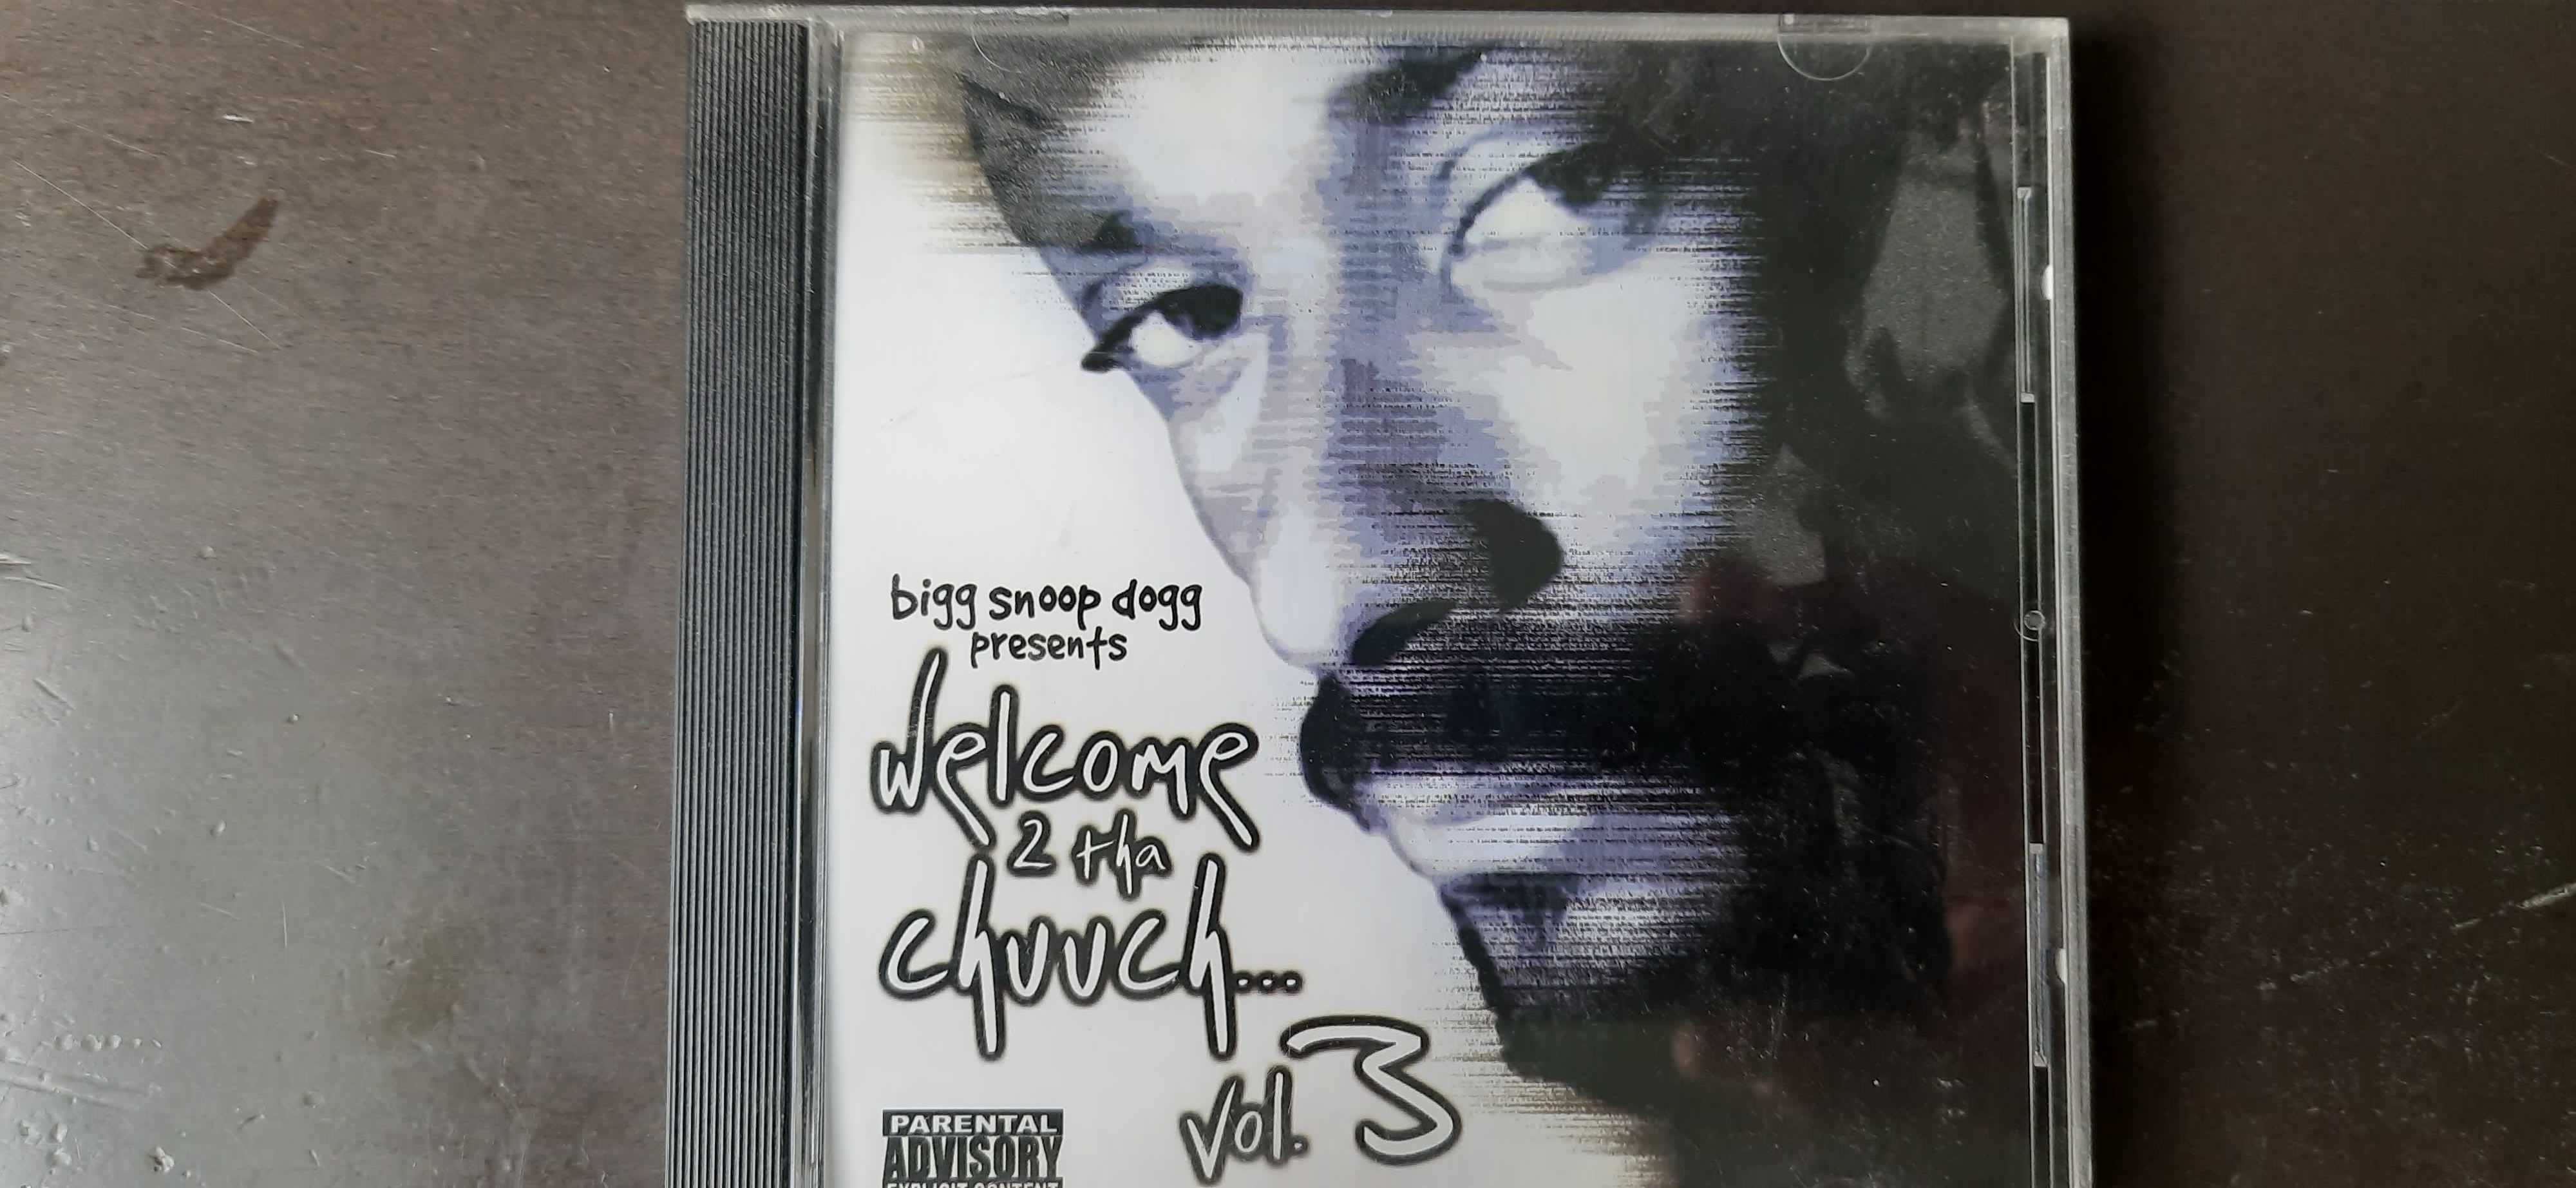 Bigg Snoop Dogg* - Welcome 2 Tha Chuuch... Vol. 3
CD